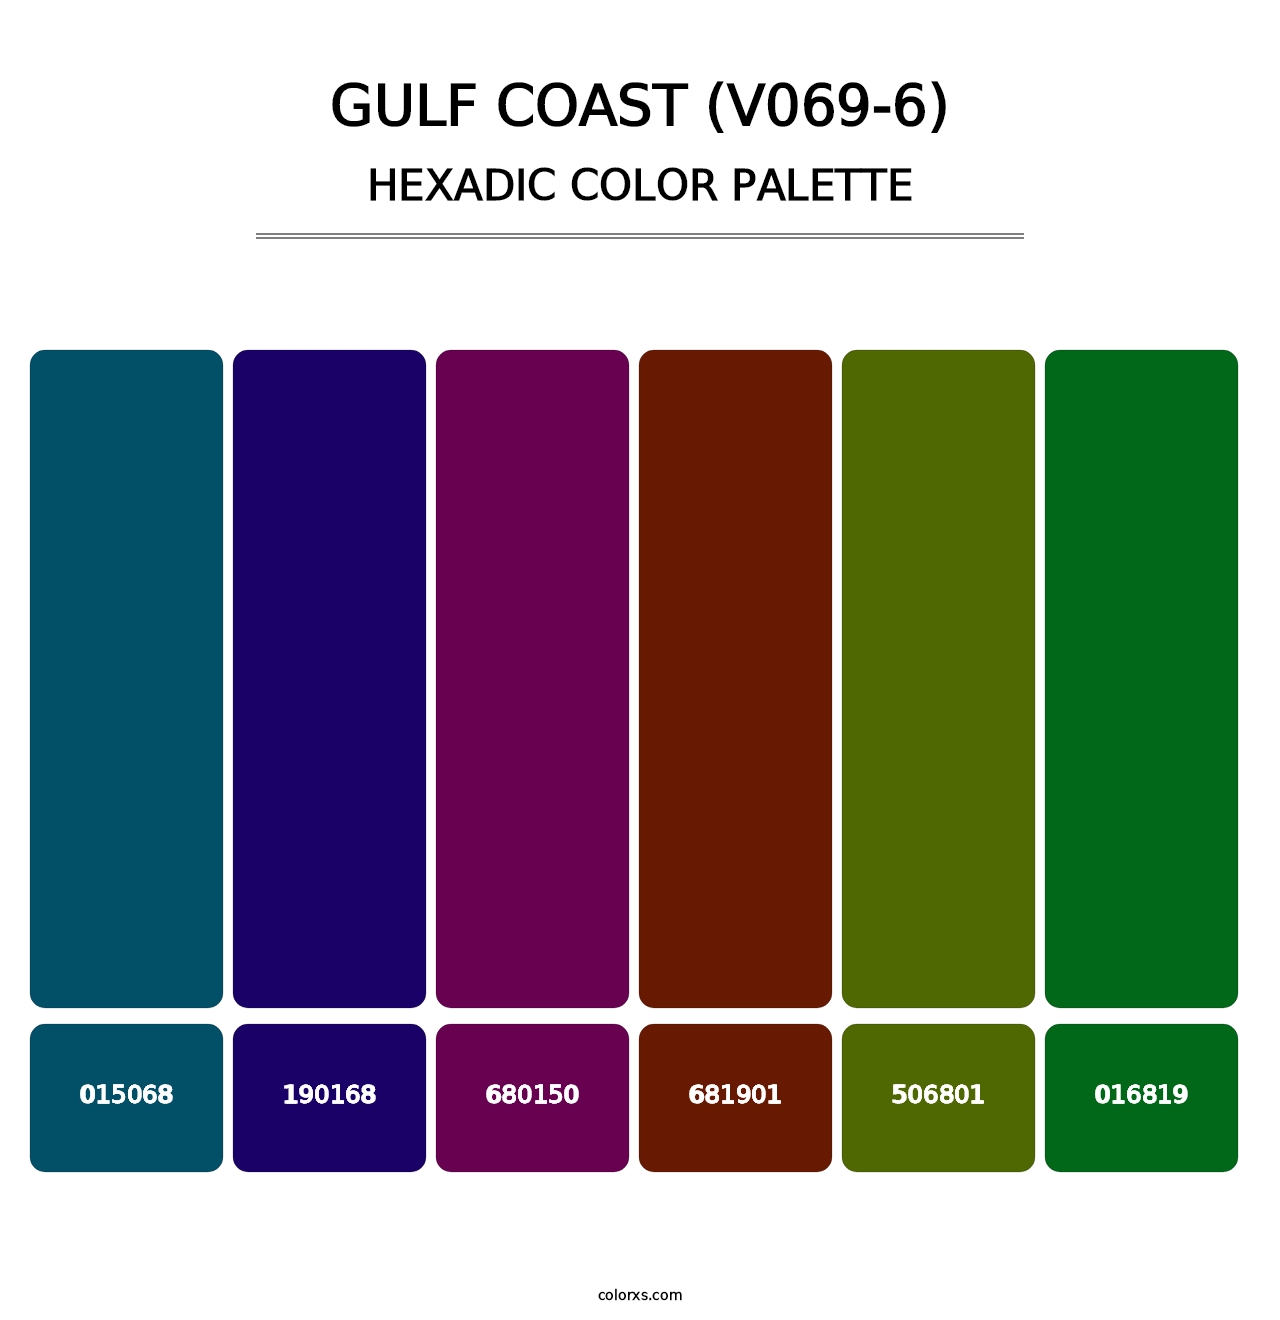 Gulf Coast (V069-6) - Hexadic Color Palette